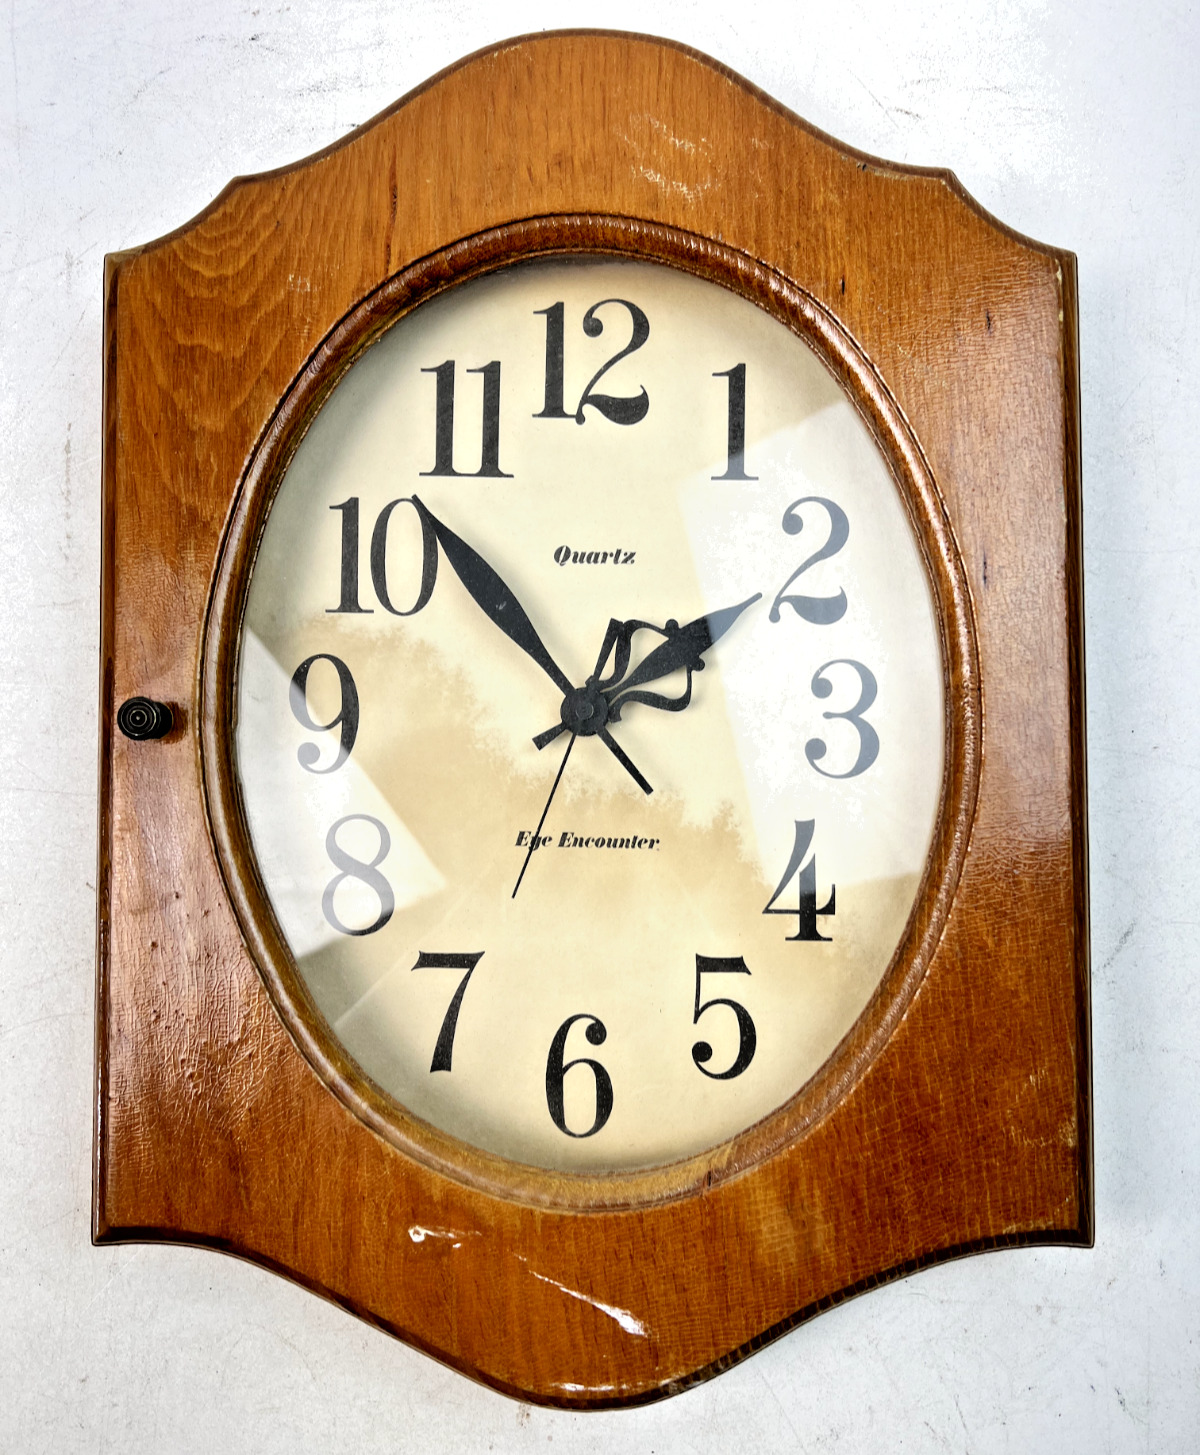 Vintage 1980 Wood Wall Hanging Quartz Eye Encounter Clock - Works